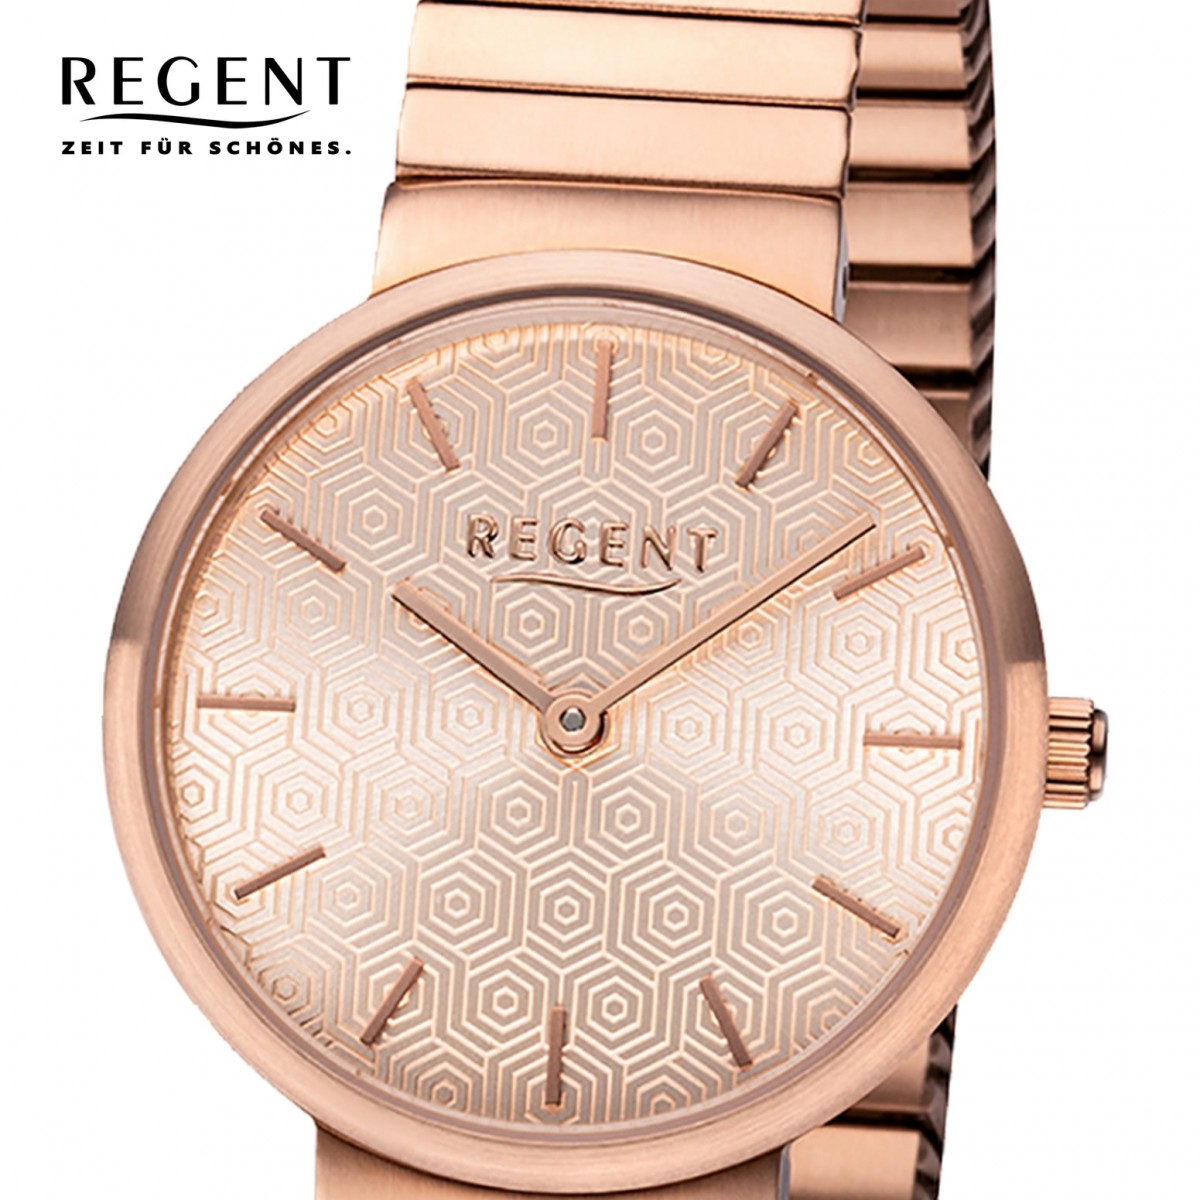 Regent Damen Armbanduhr Analog URBA583 BA-583 Quarz-Uhr rosegold Edelstahl